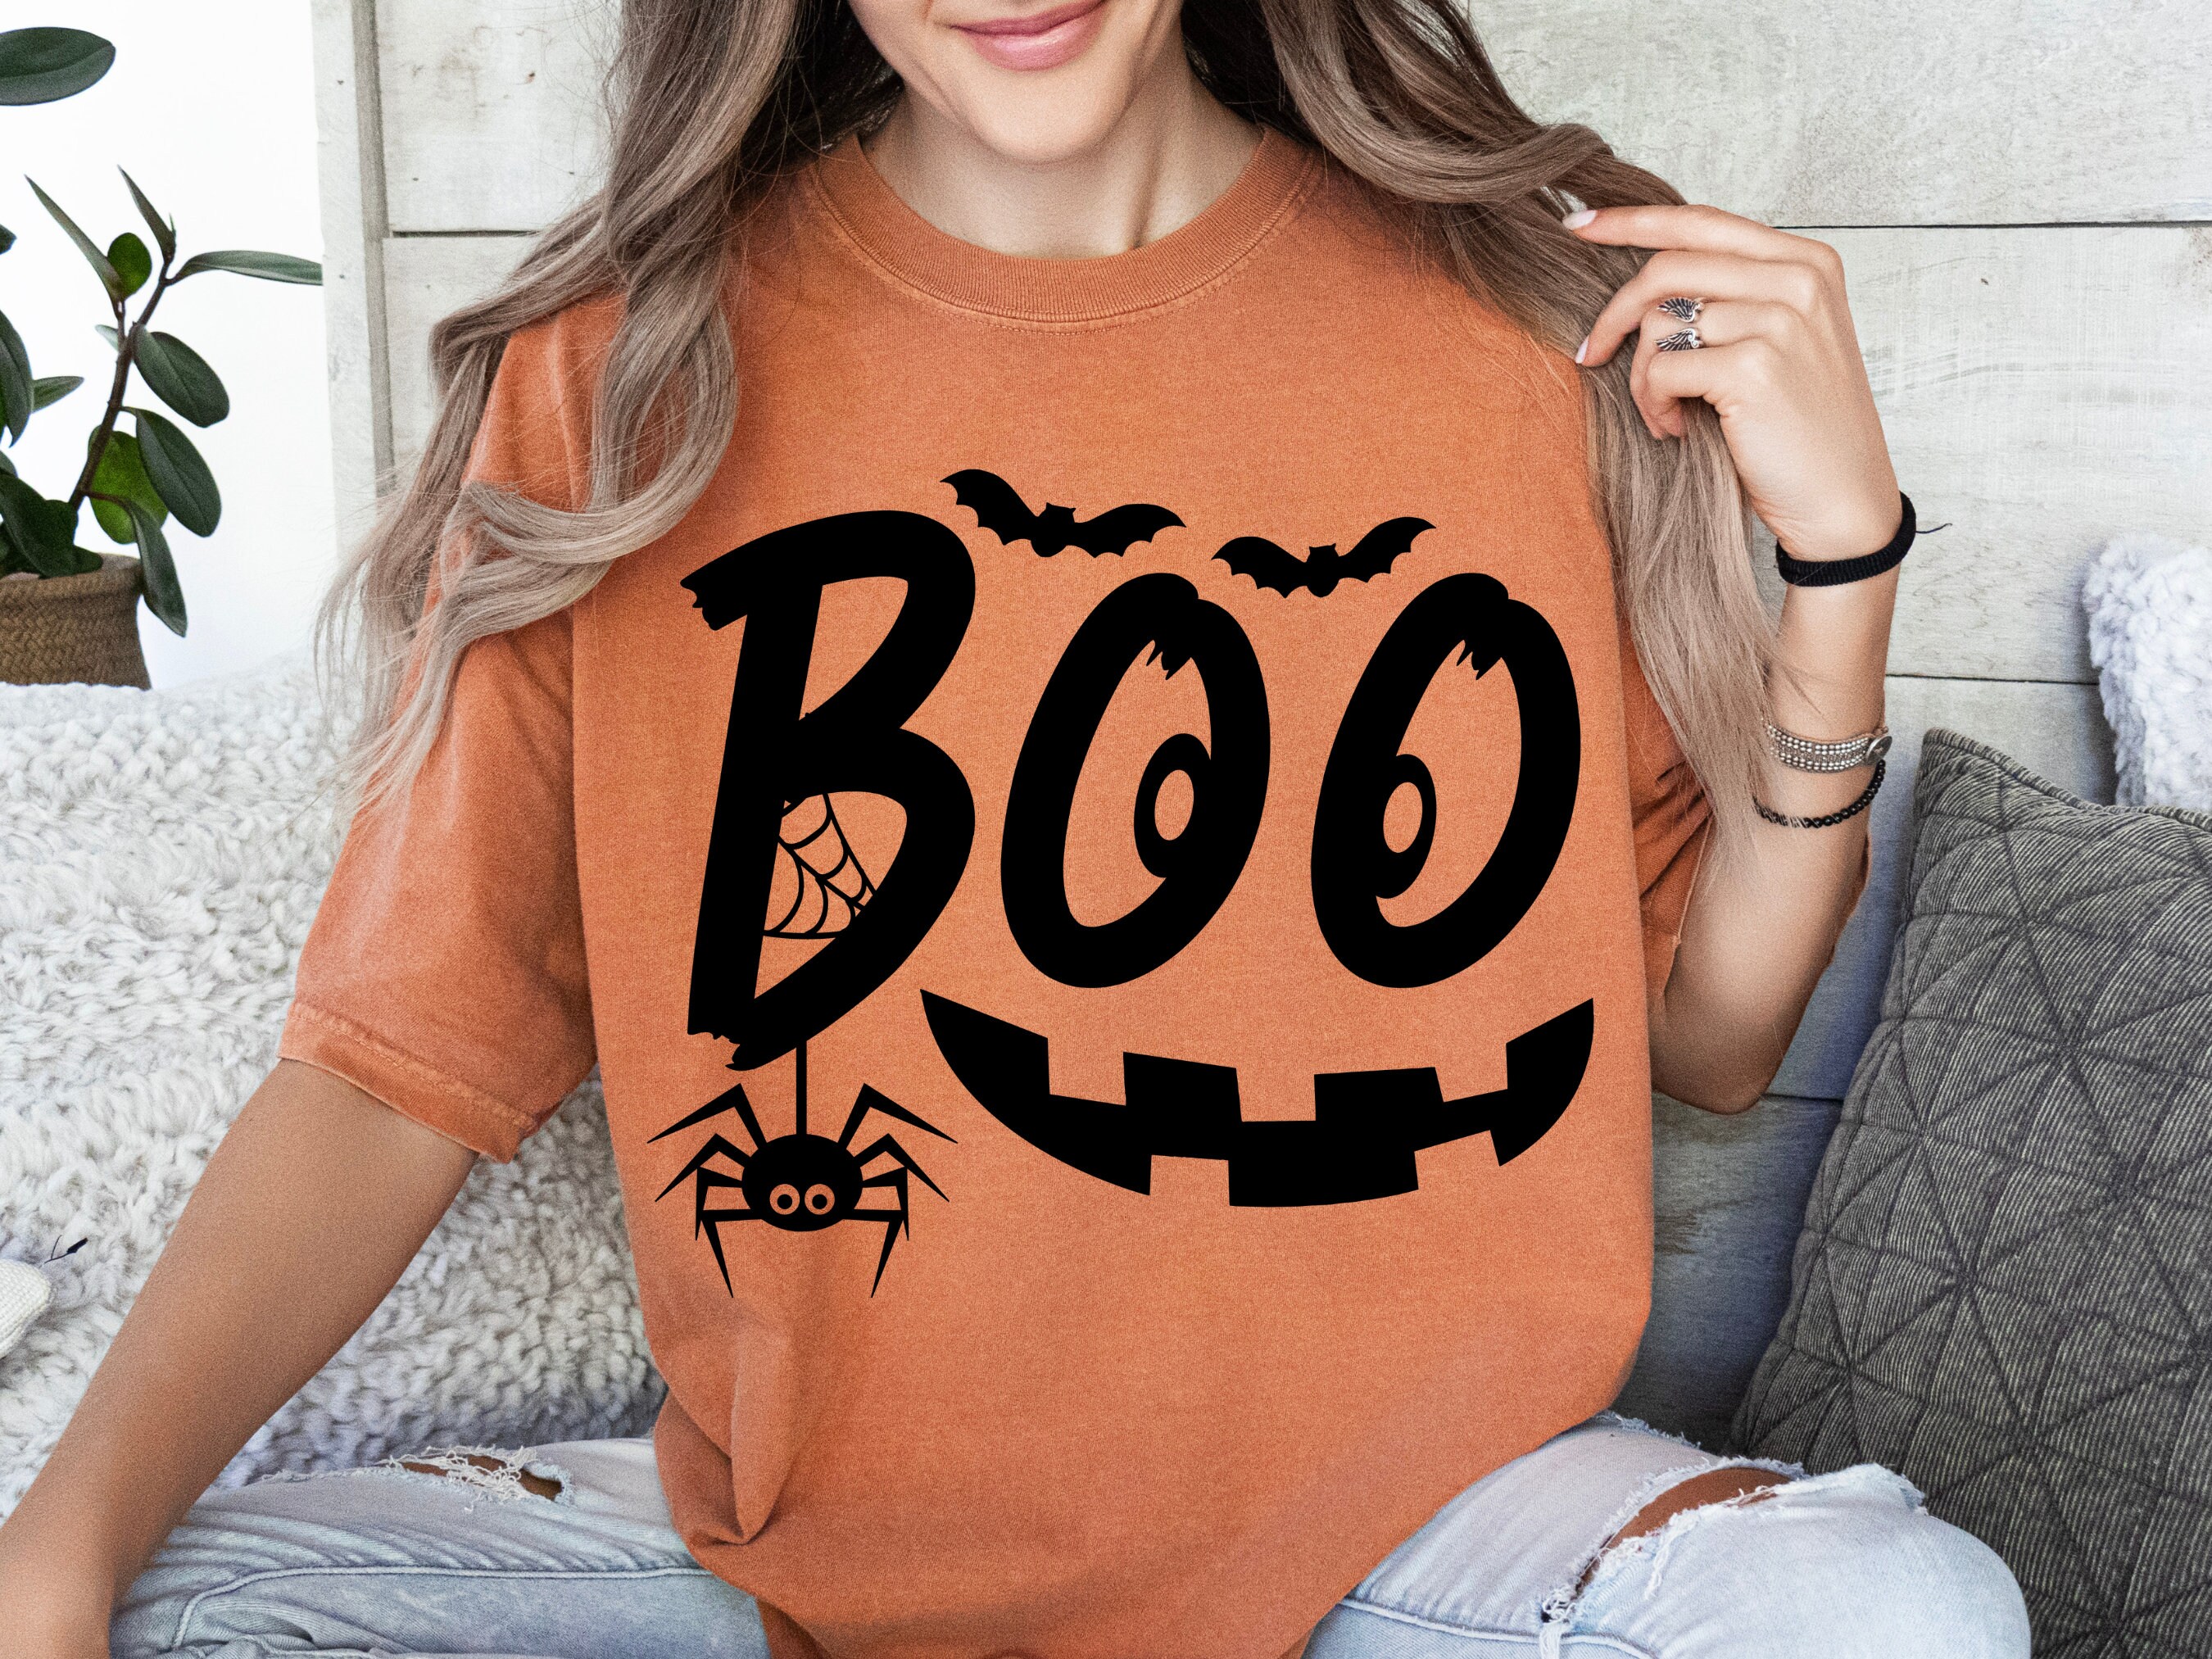 Pumpkin Face Family Halloween T-shirt Graphic by shipna2005